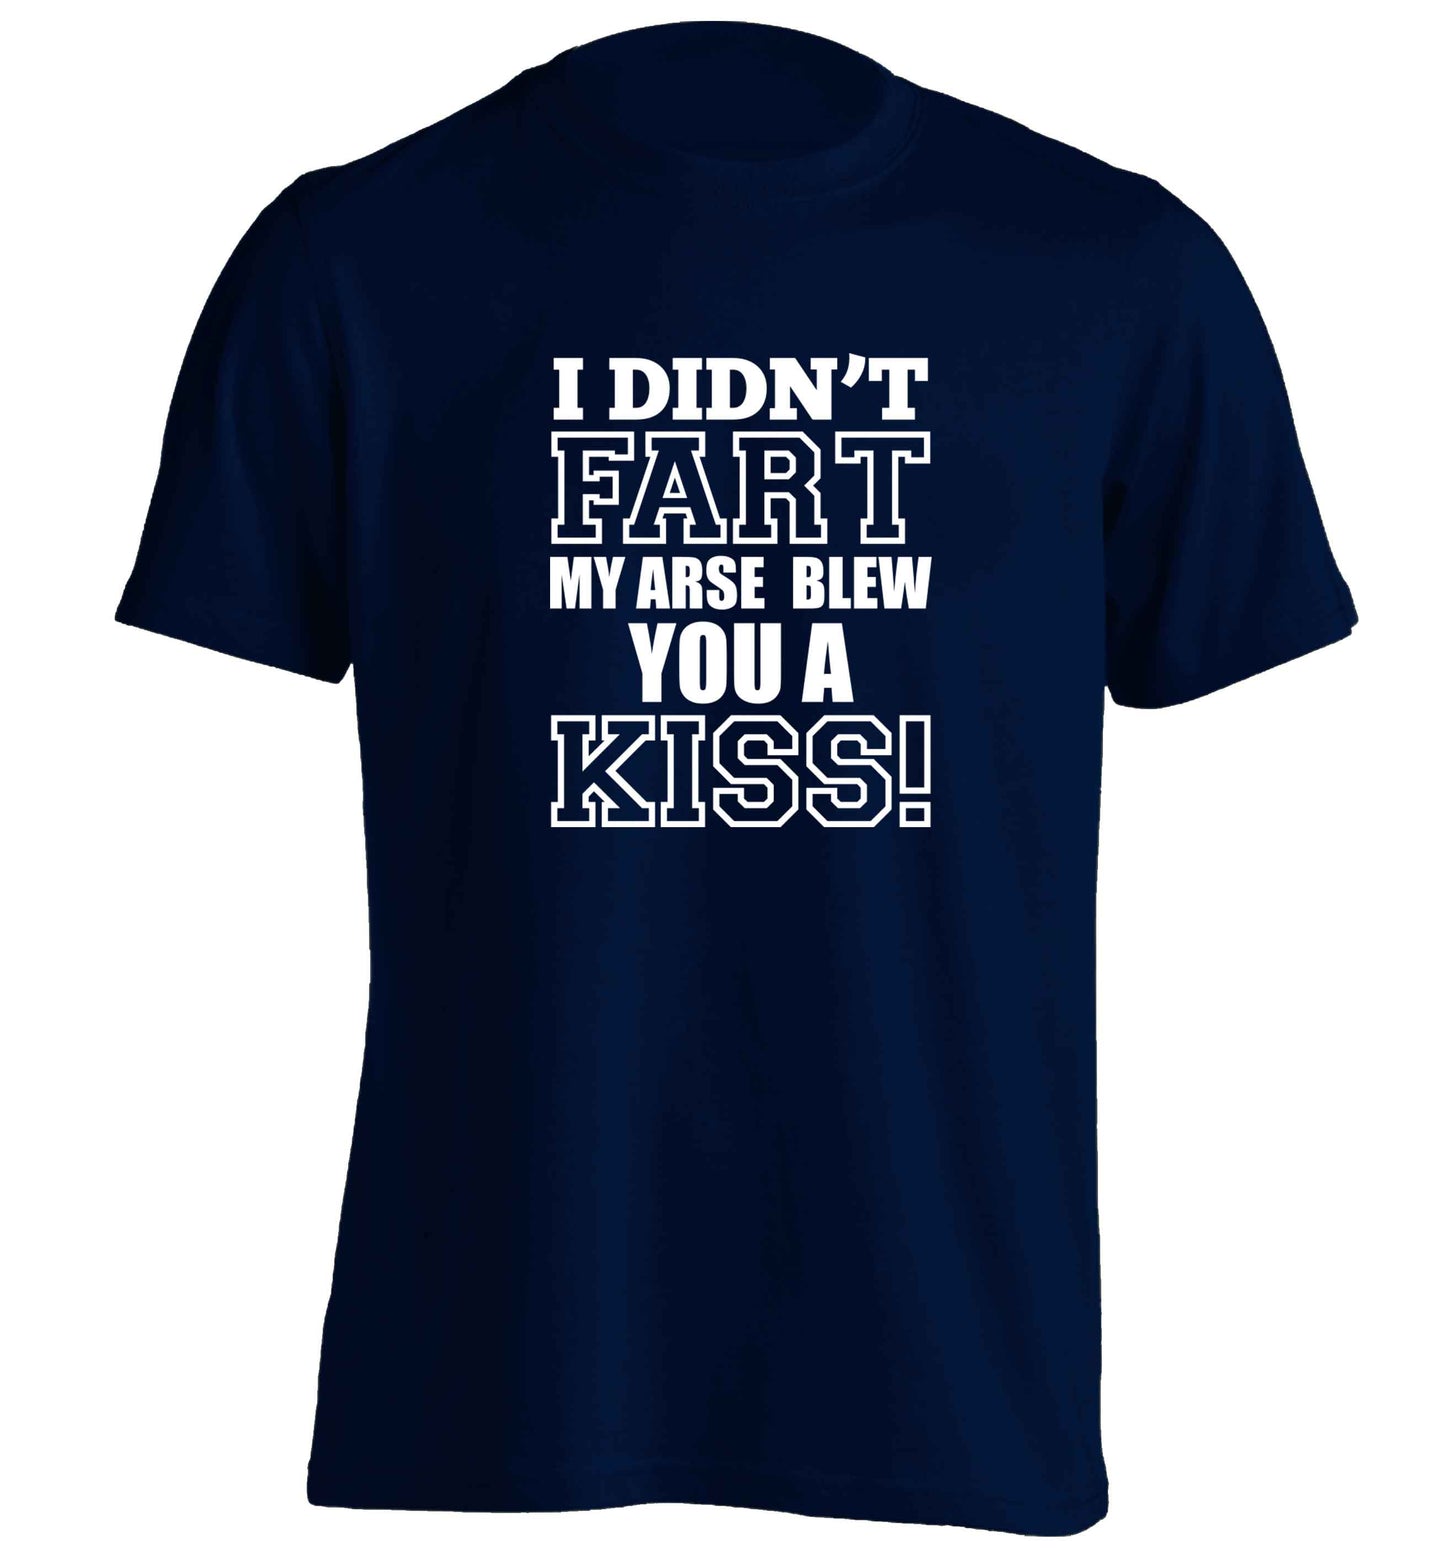 I didn't fart my arse blew you a kiss adults unisex navy Tshirt 2XL